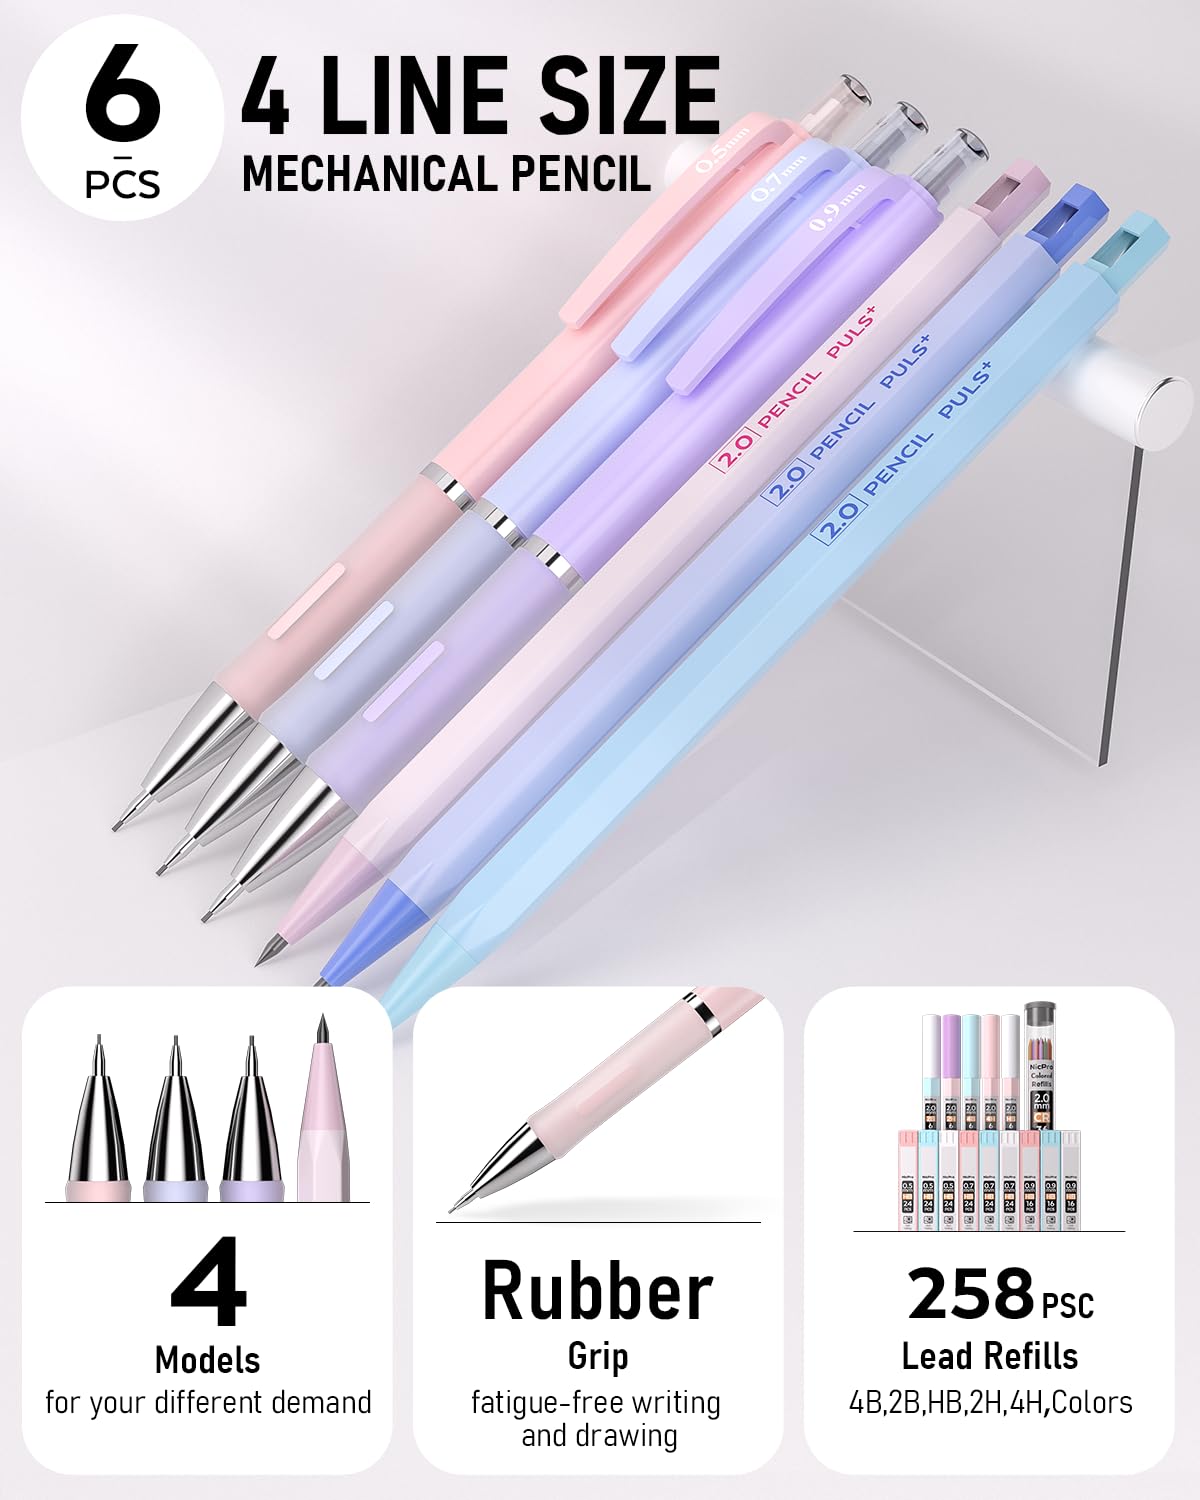 30 Pcs (10 Colors/set) Pens Cute Colorful Gel Ink Pen Set Multi Colored Pens  Roller Ball Fine Point Pens for Women 0.5 Mm - AliExpress